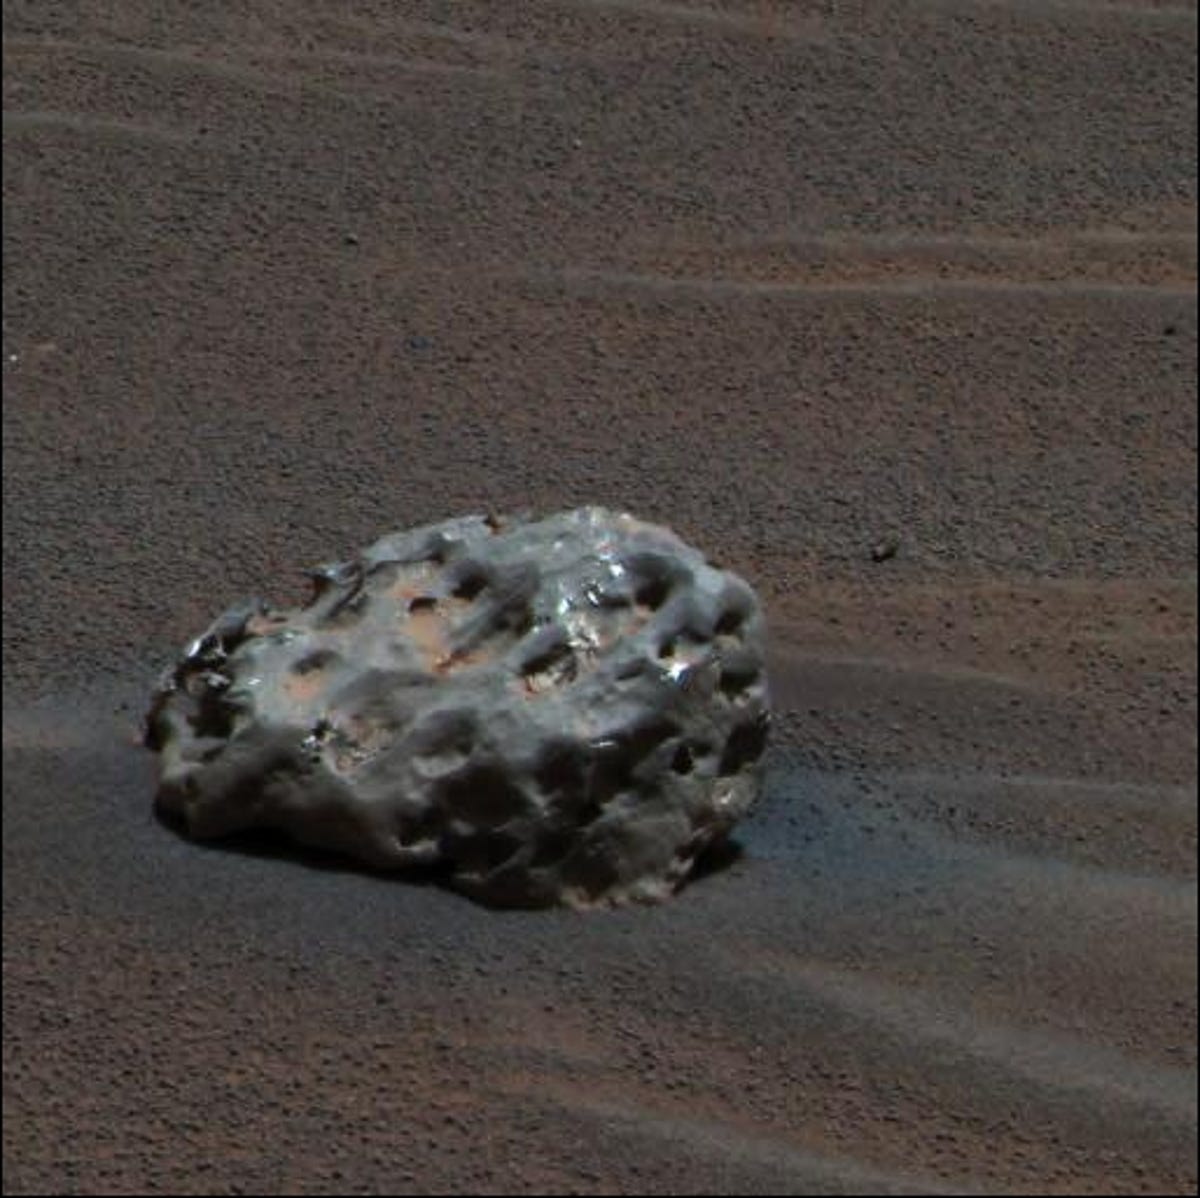 PIA07269-Mars_Rover_Opportunity-Iron_Meteorite.jpg